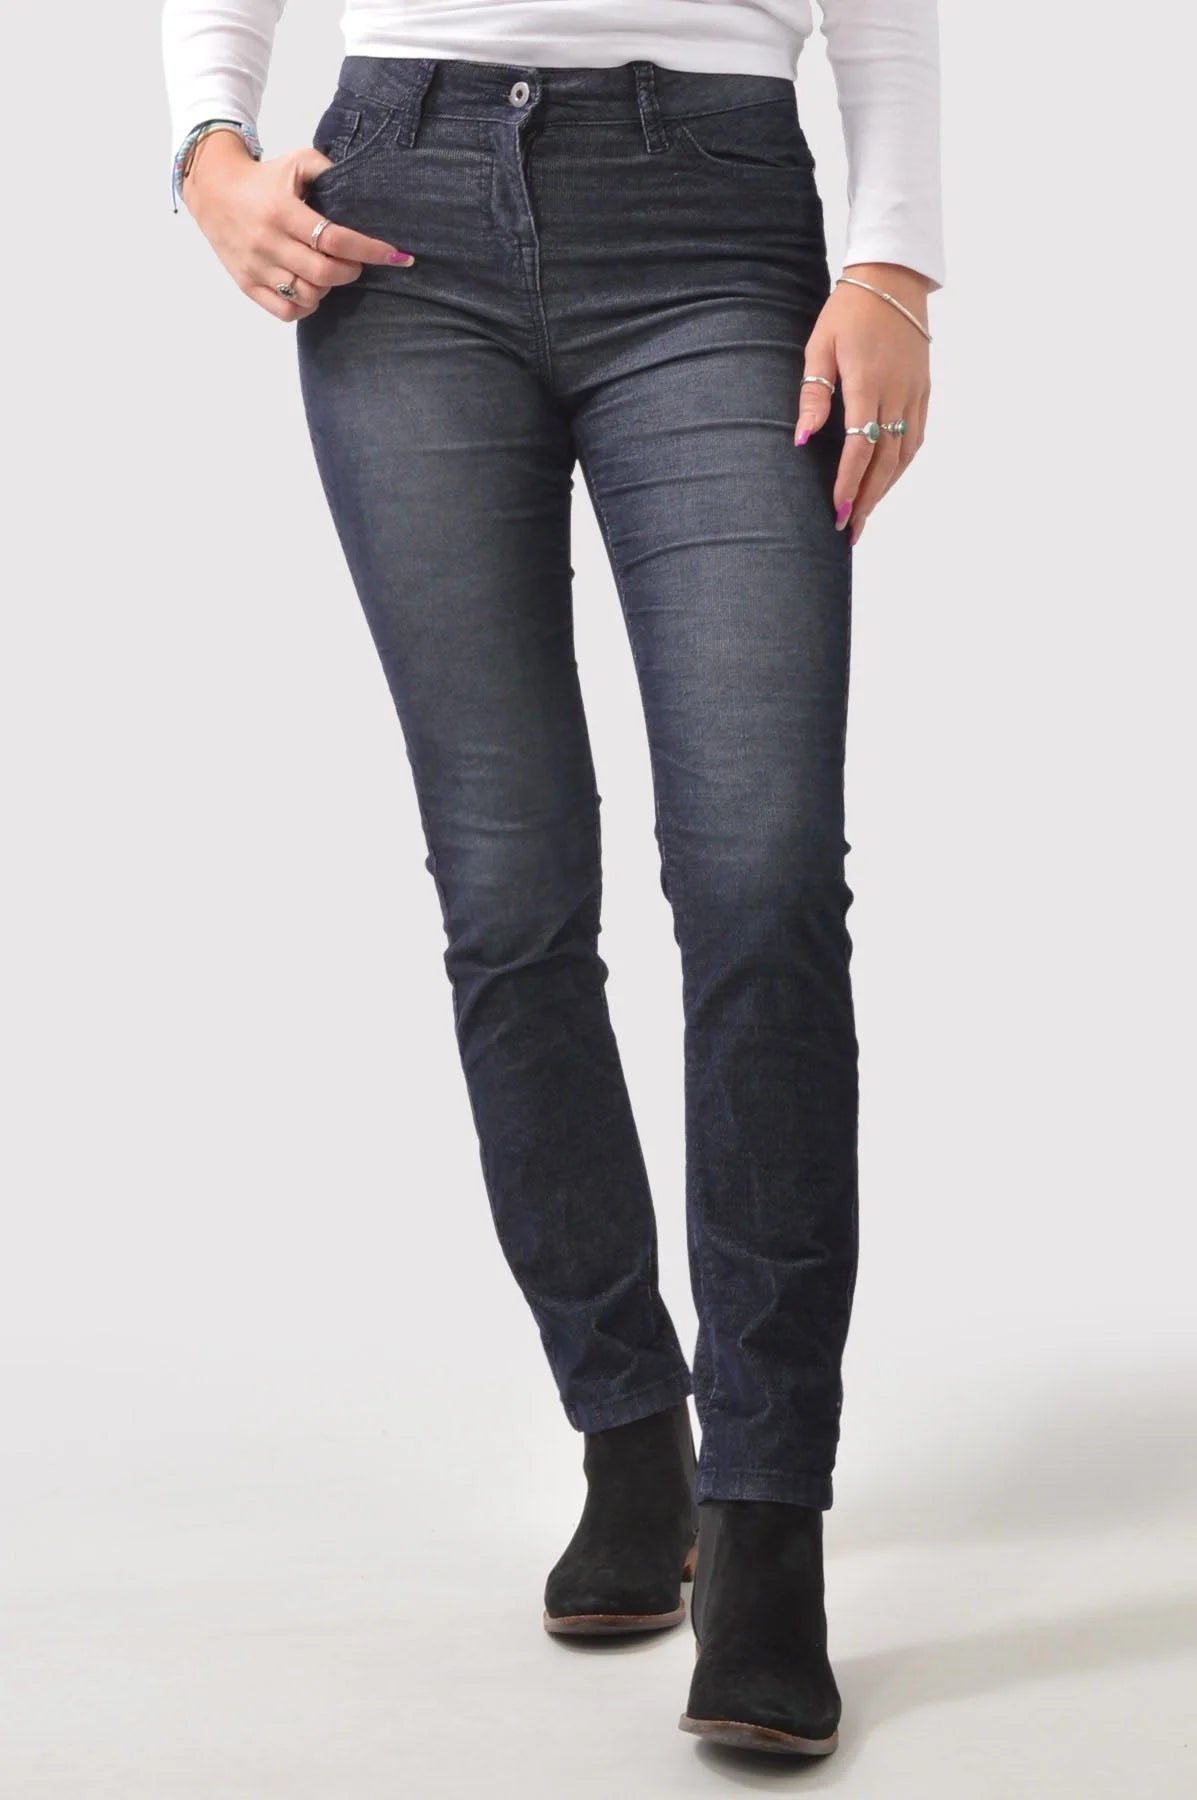 Secret Label Needlecord Slim Leg Jeans Charcoal / 6 / Reg